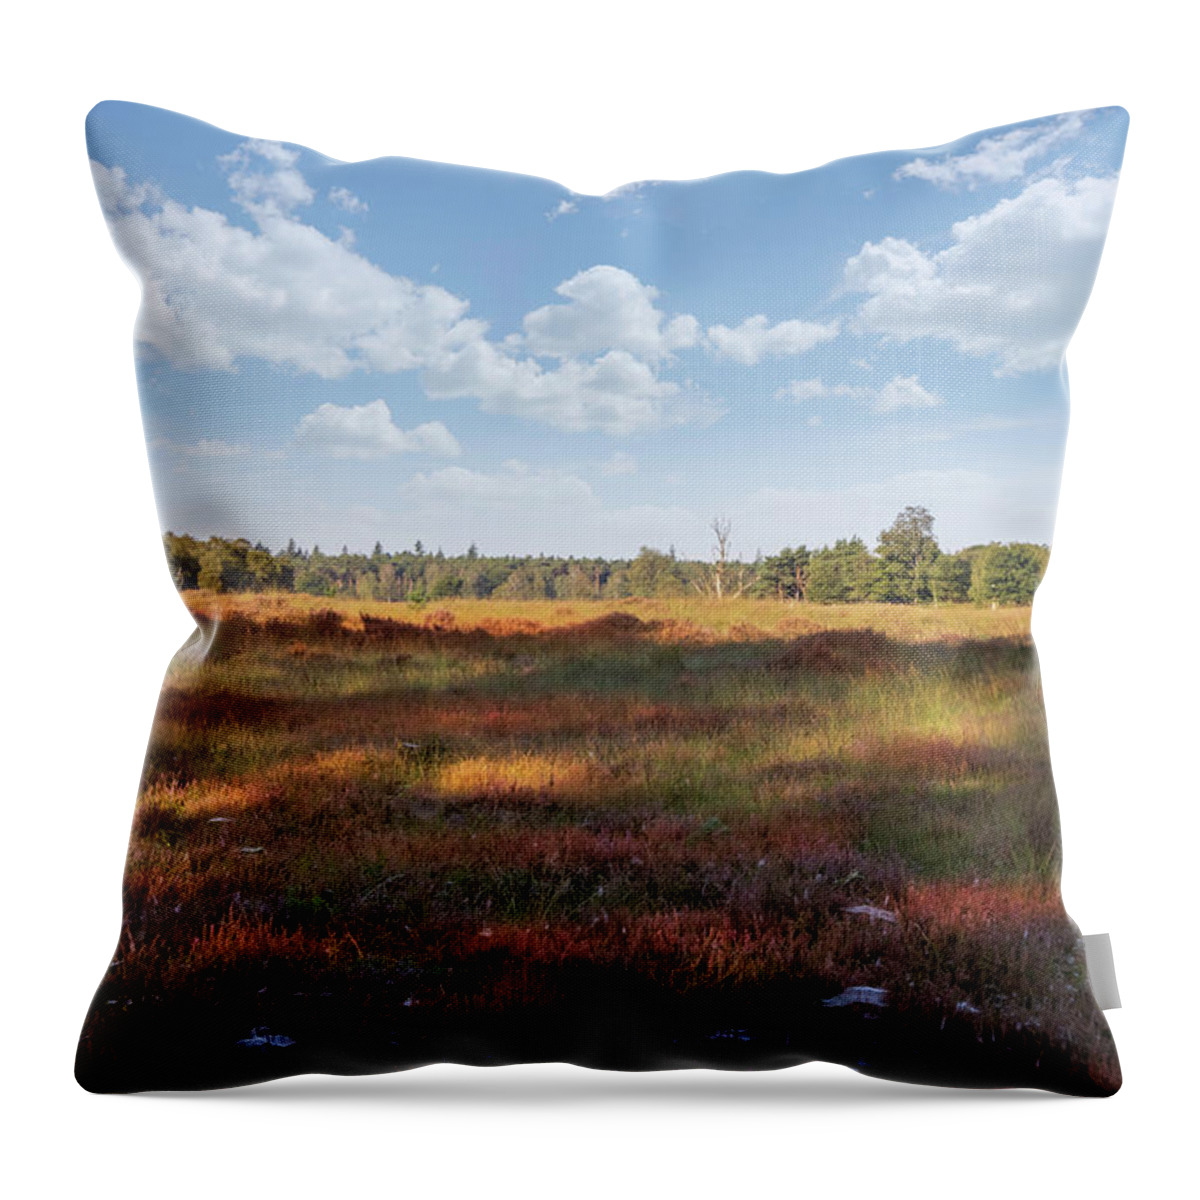 Heathland Landscape Throw Pillow featuring the photograph Heathland landscape by MPhotographer